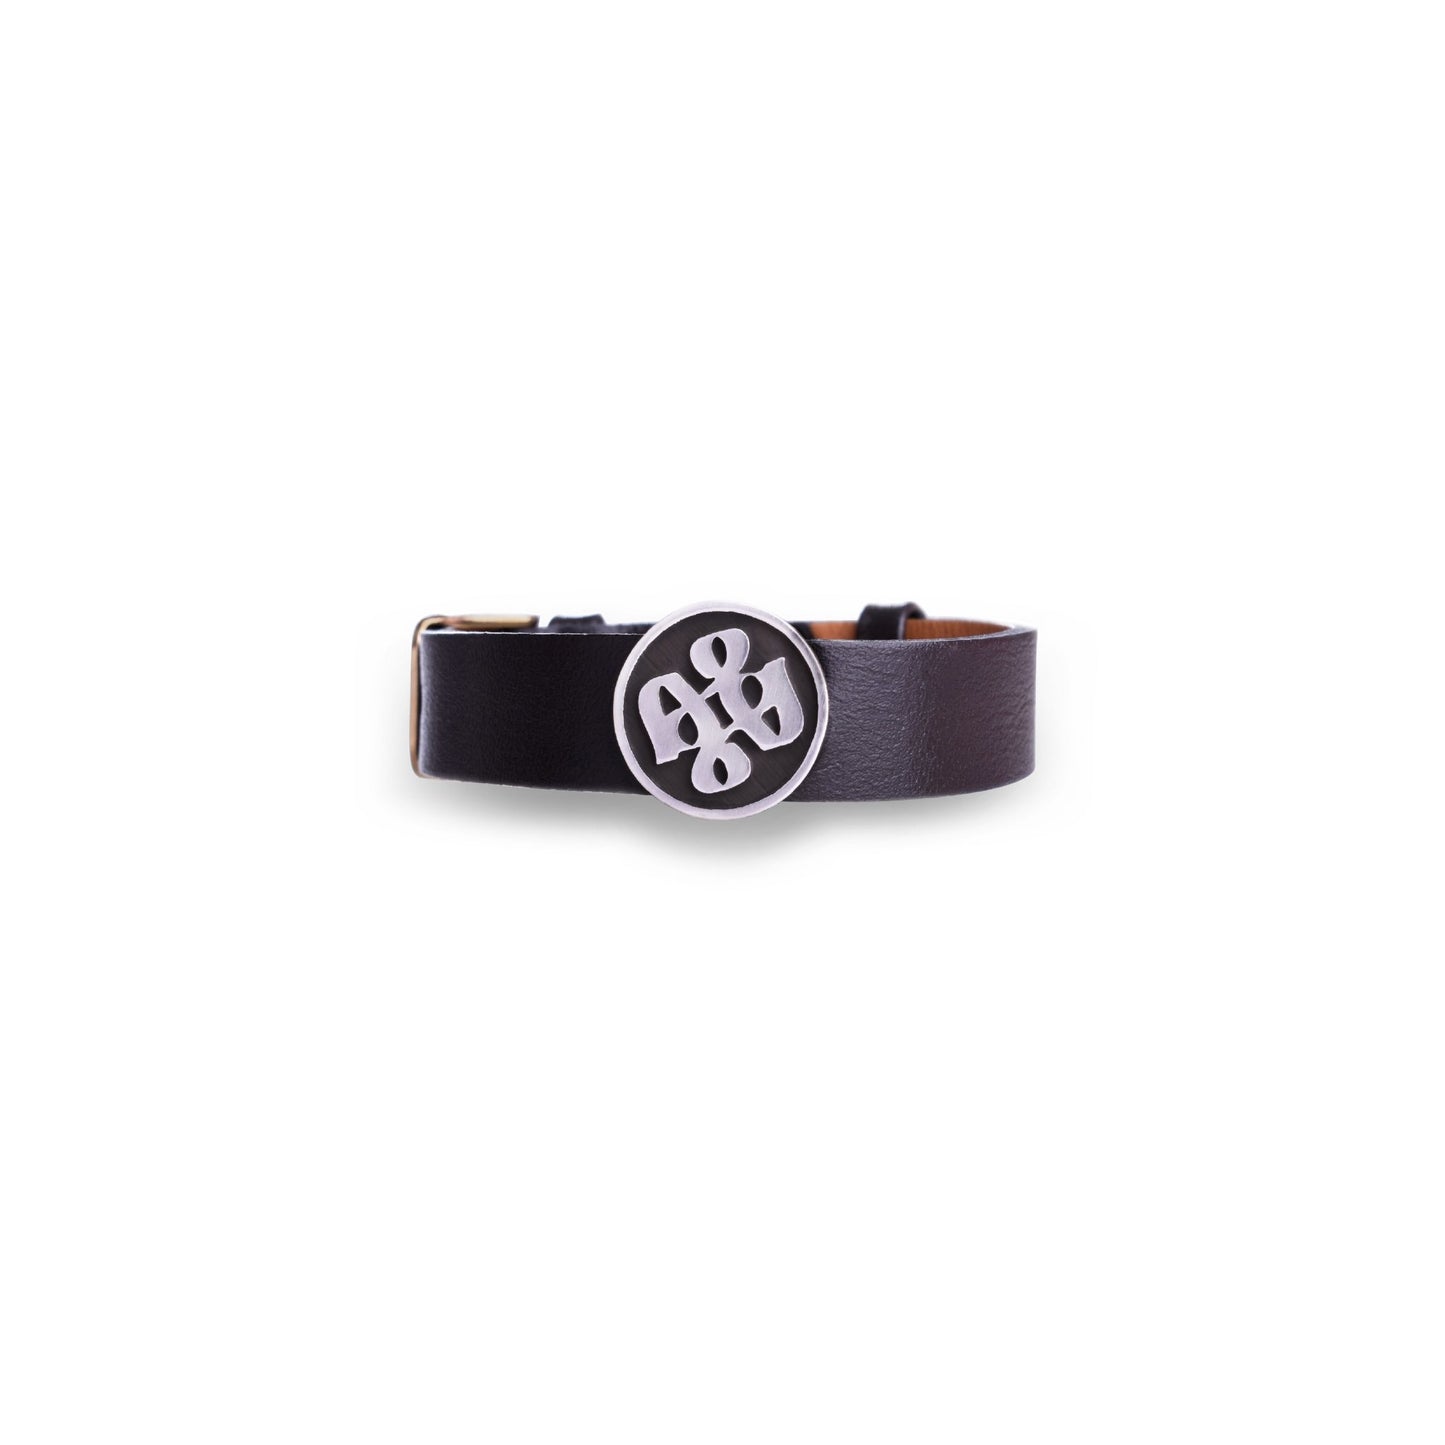 Ho - Bracelet with leather strap - Bonotee